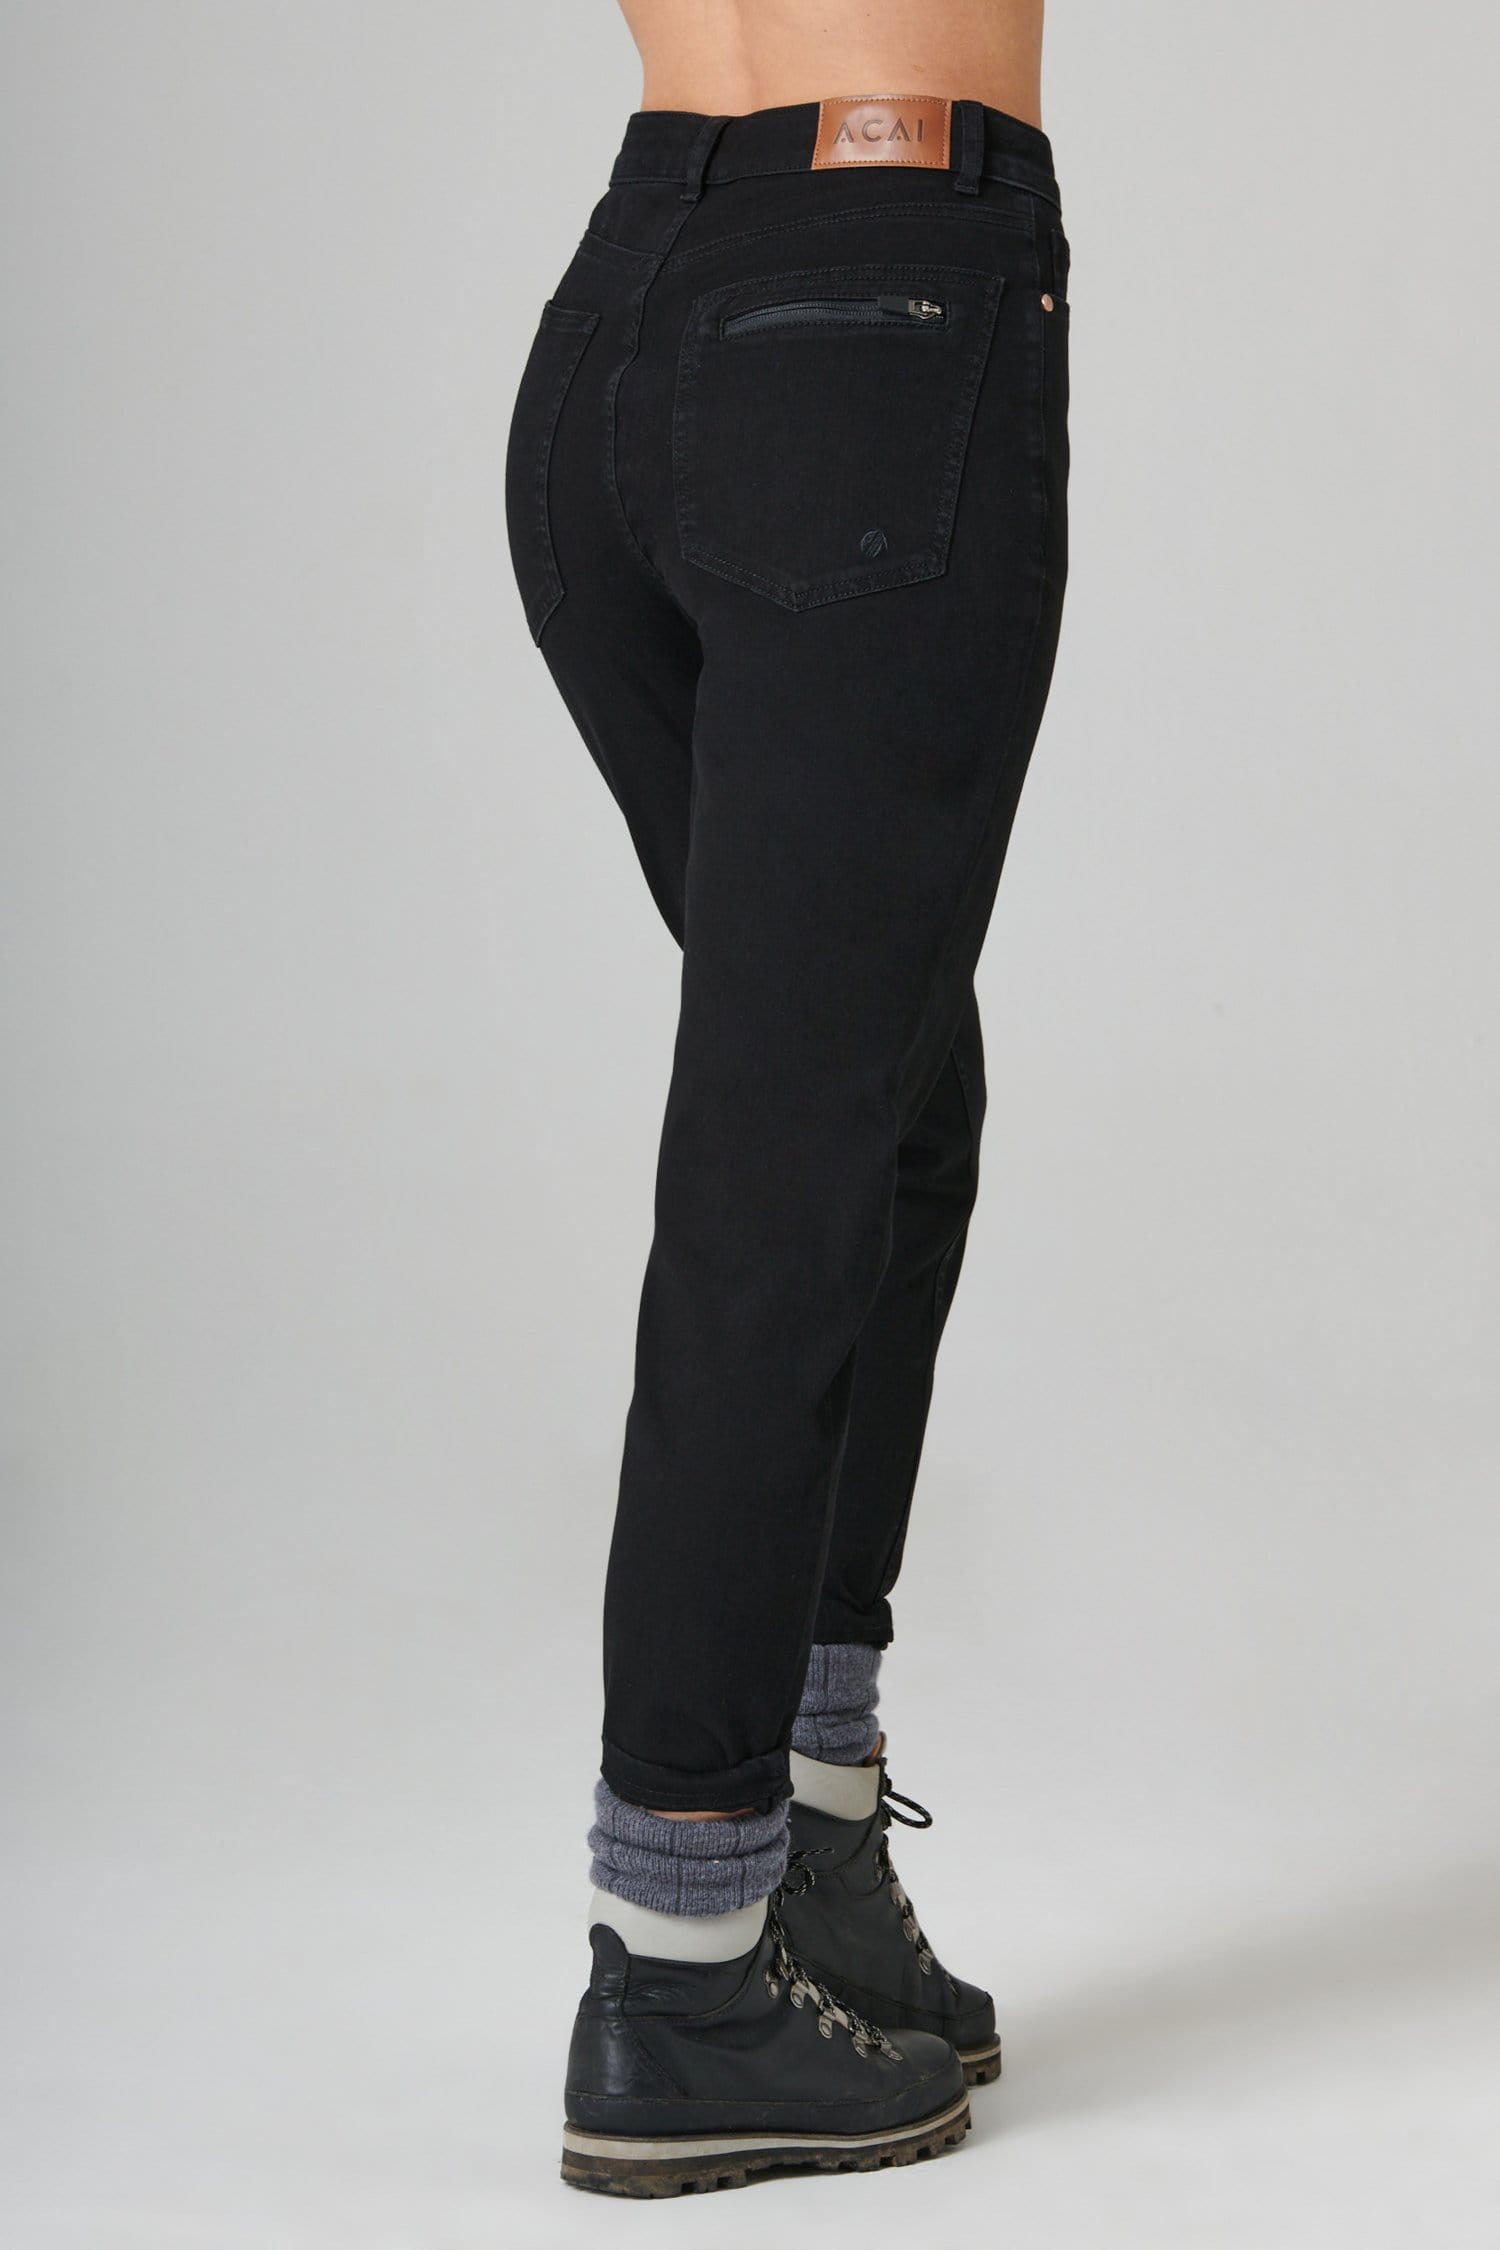 The Outdoor Slim Fit Jeans - Black Denim